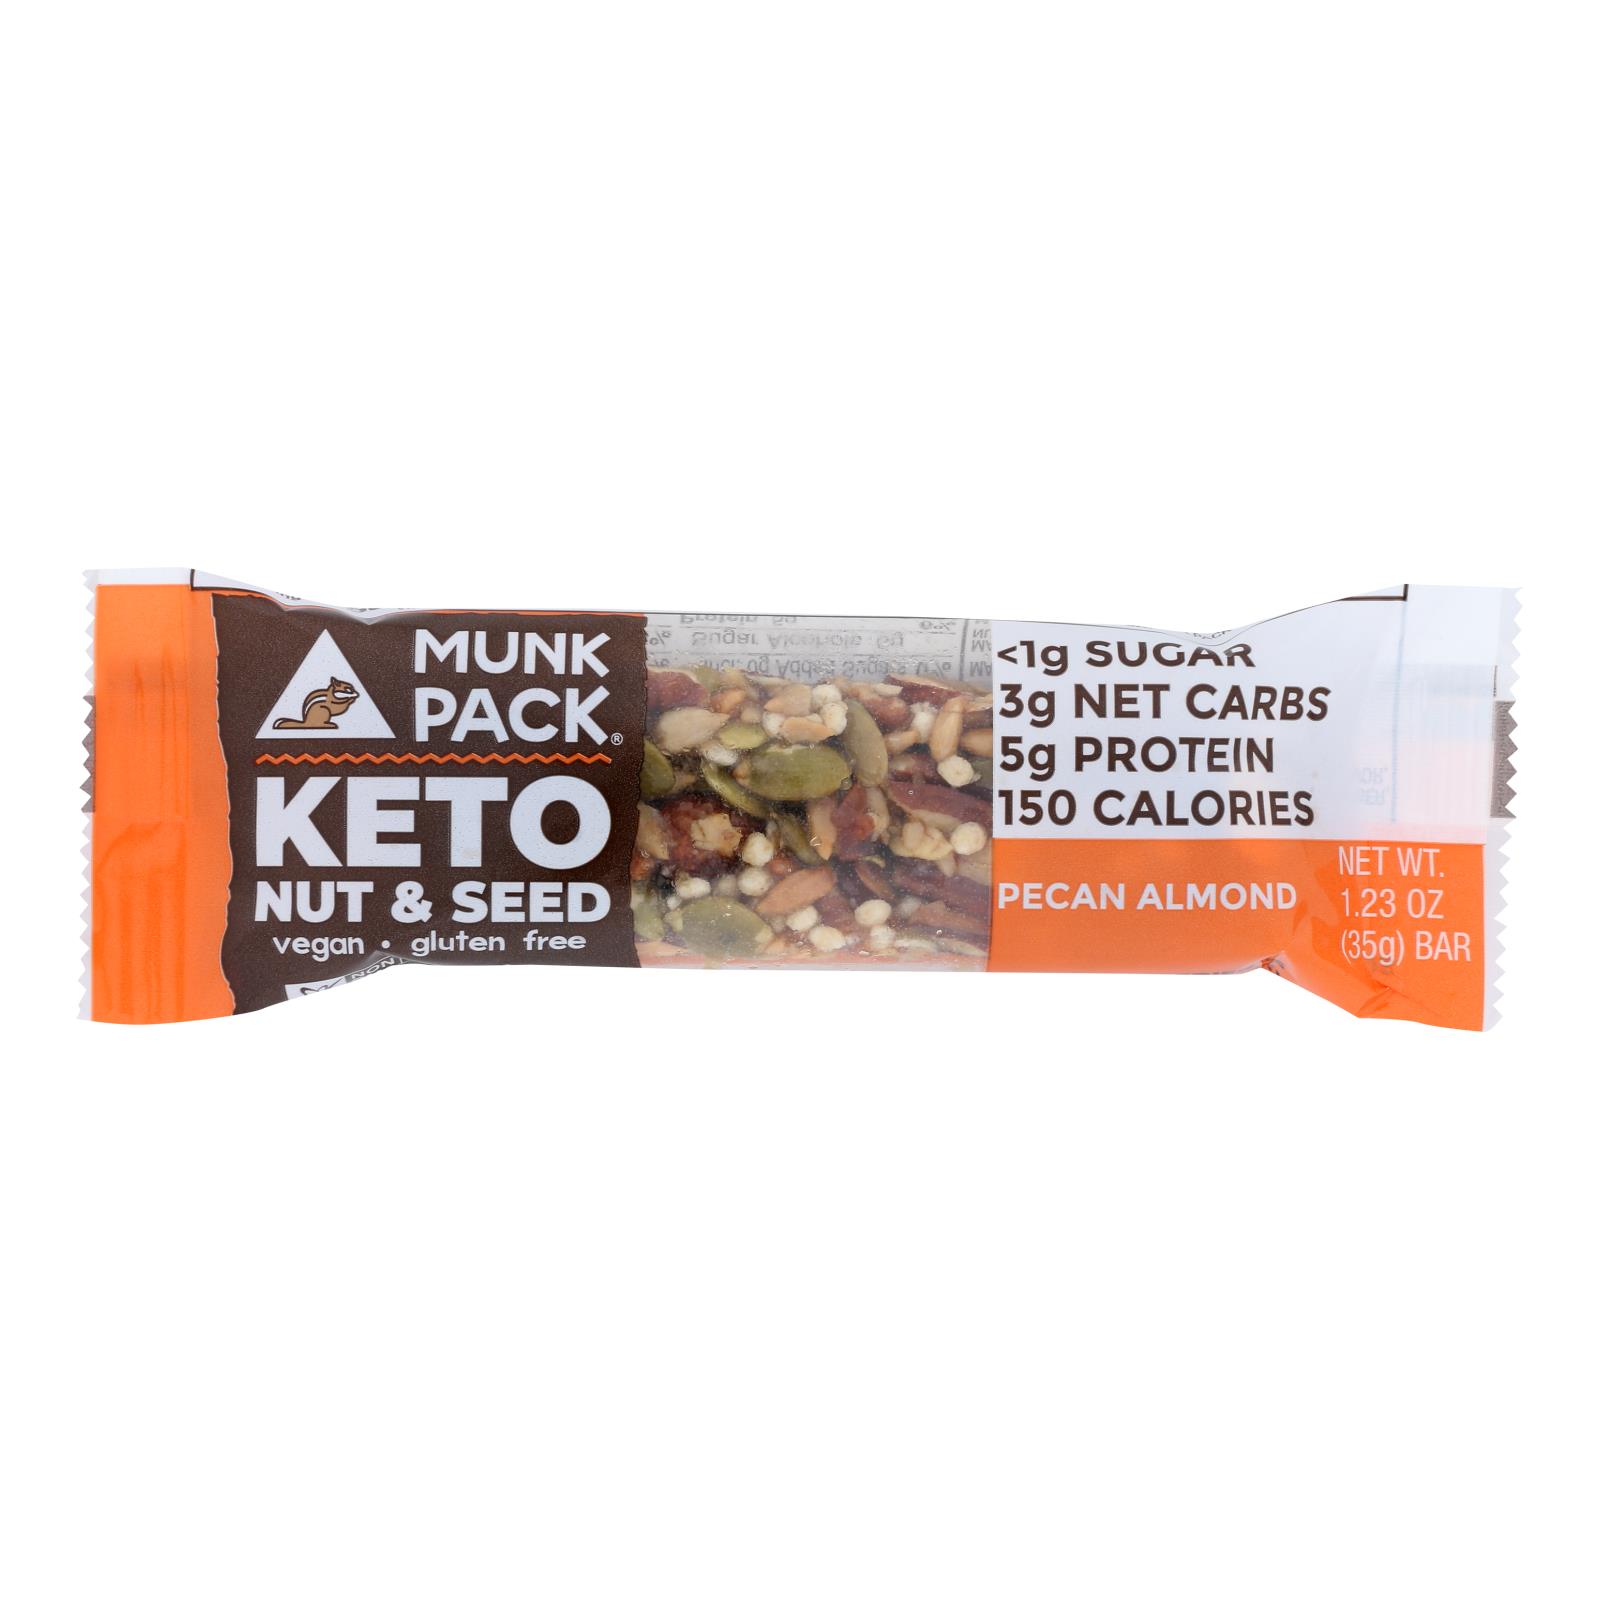 Munk Pack - Keto Nt&sd Pecan Almond - 12개 묶음상품 - 1.23 OZ